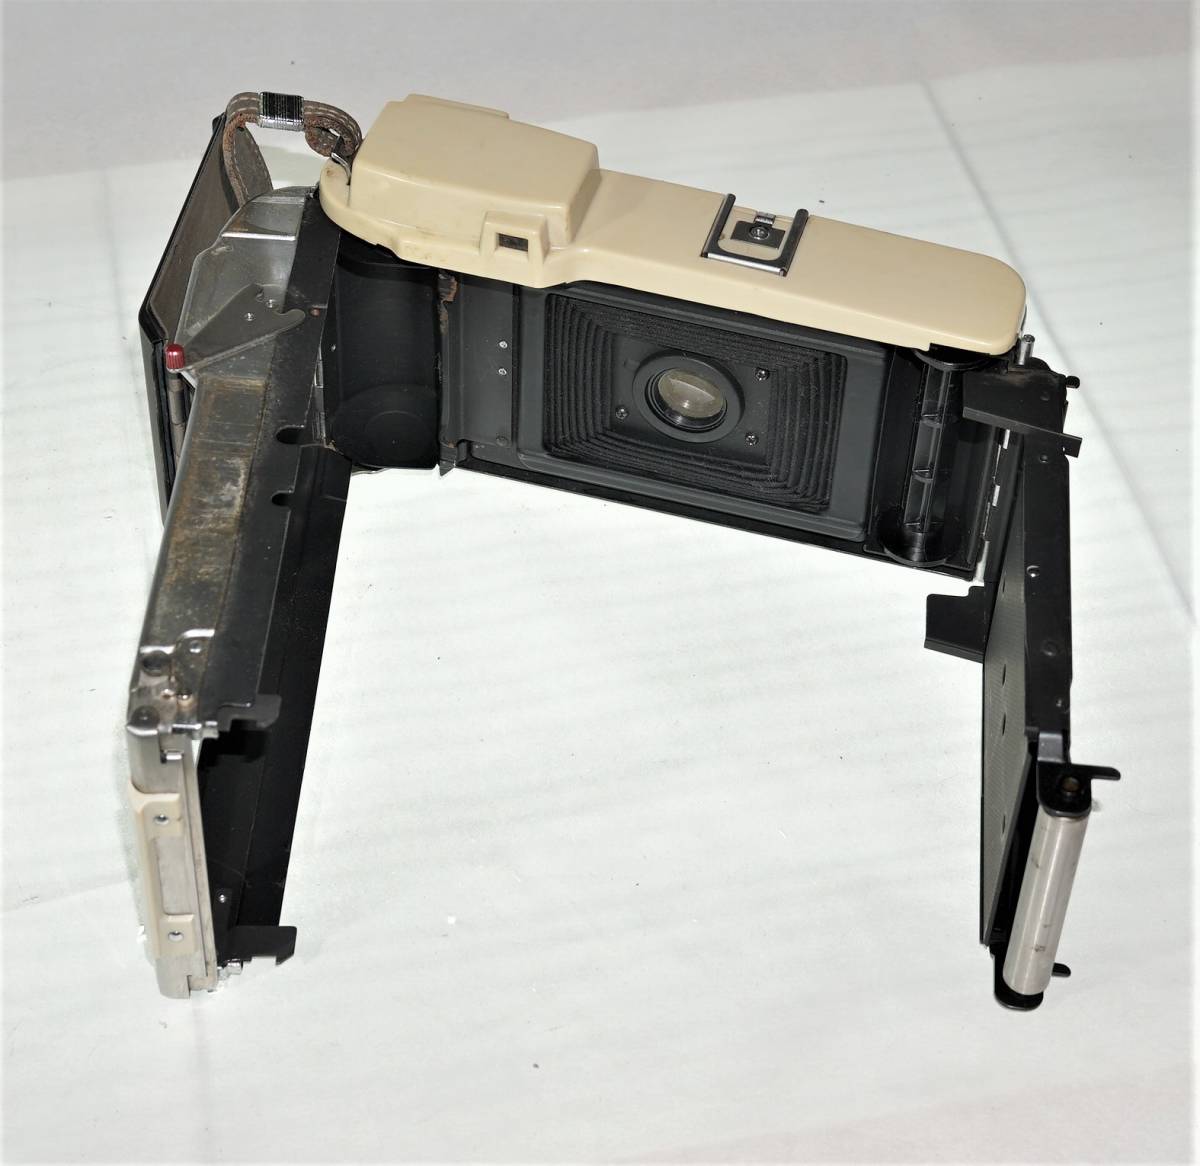  Polaroid camera *POLAROID LAND MODEL 808